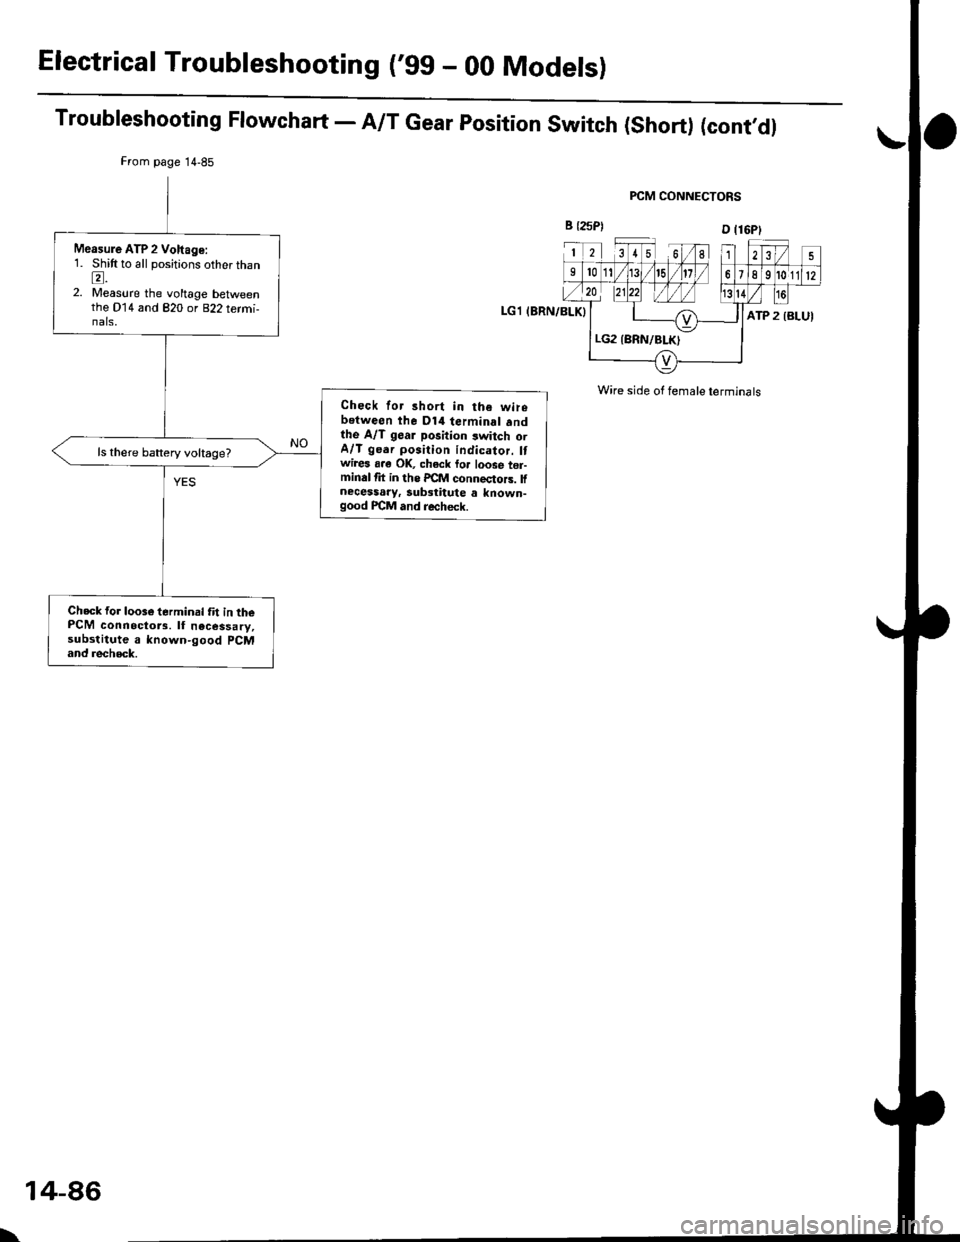 HONDA CIVIC 1996 6.G Workshop Manual ElectricalTroubleshooting (gg - 00 Models)
Troubleshooting Flowchart - A/T Gear position Switch (Short) (cont,dl
LGl (BRN/BLK}
FCM CONNECTORS
B {25P)D l16Pl
12[Ll81235
9101/113/ 151/)11789t0112,/ 20
